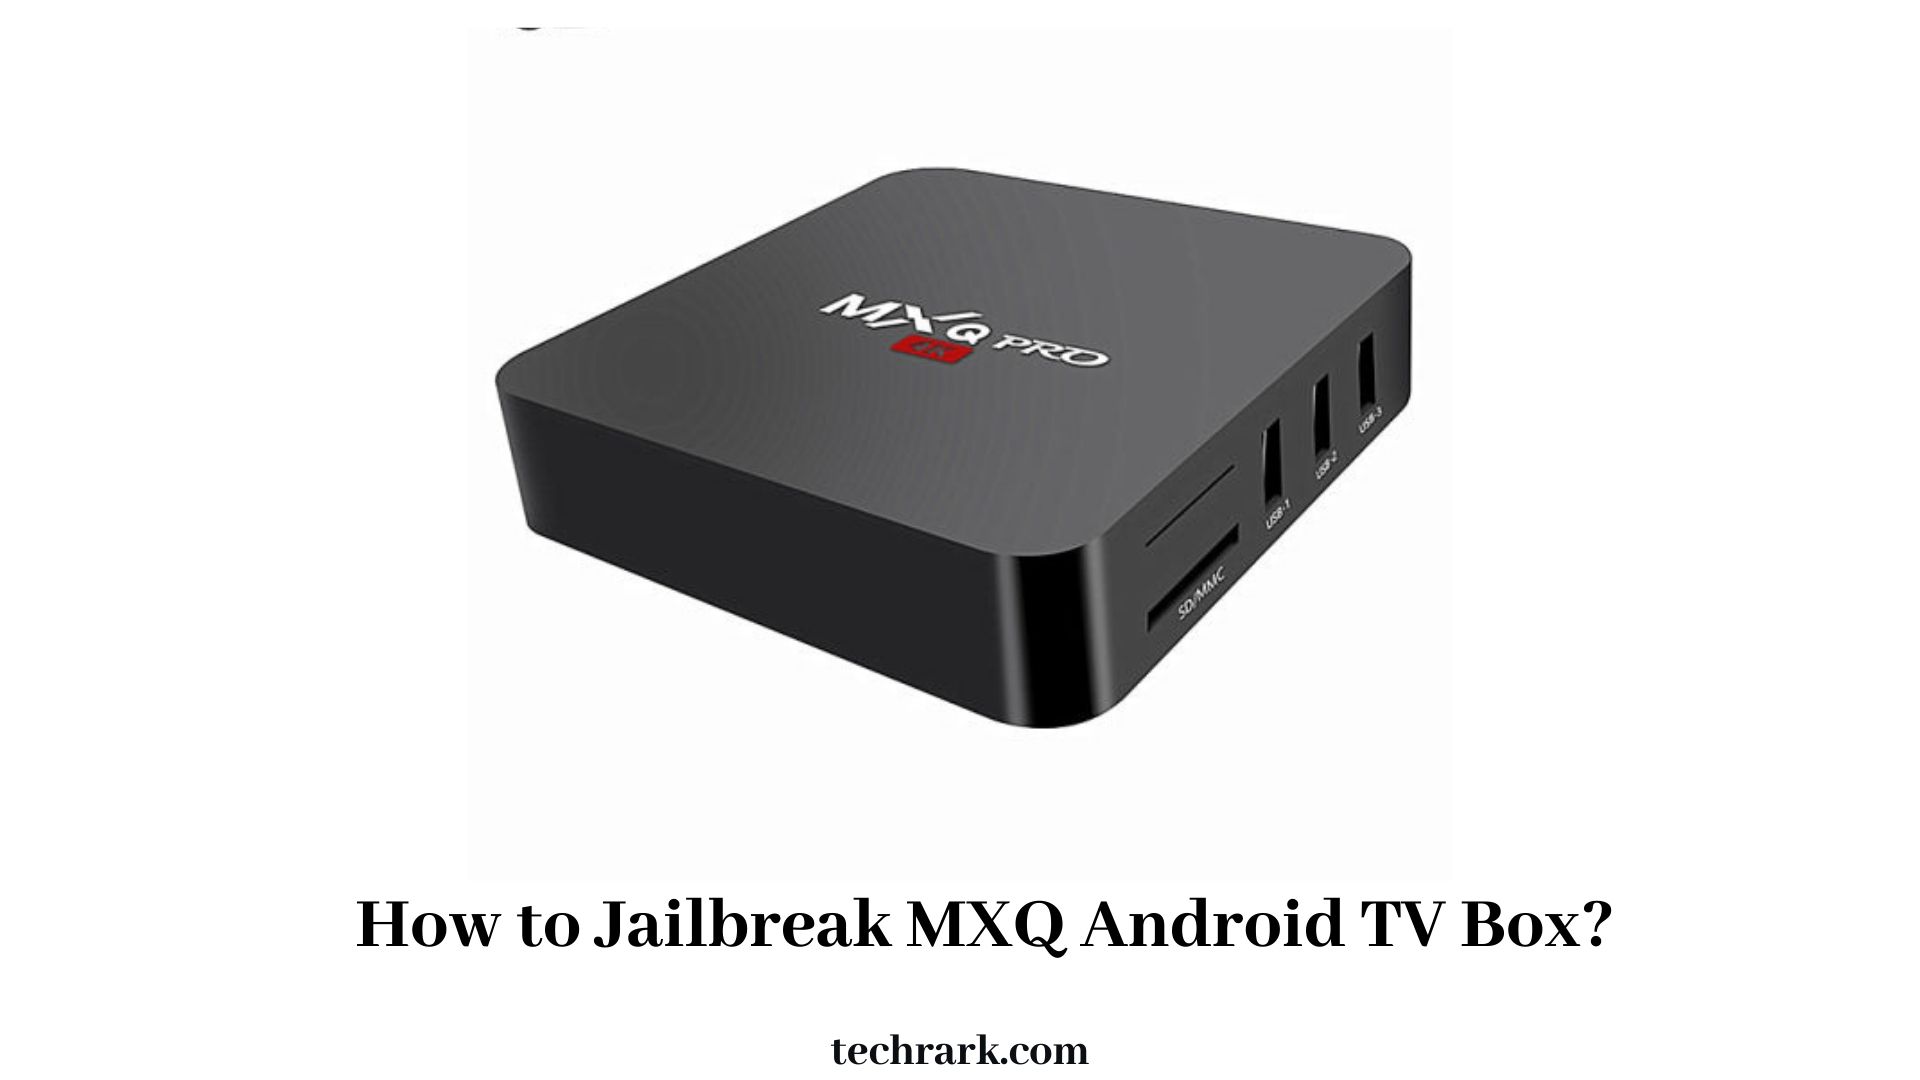 How to Jailbreak MXQ Android TV Box